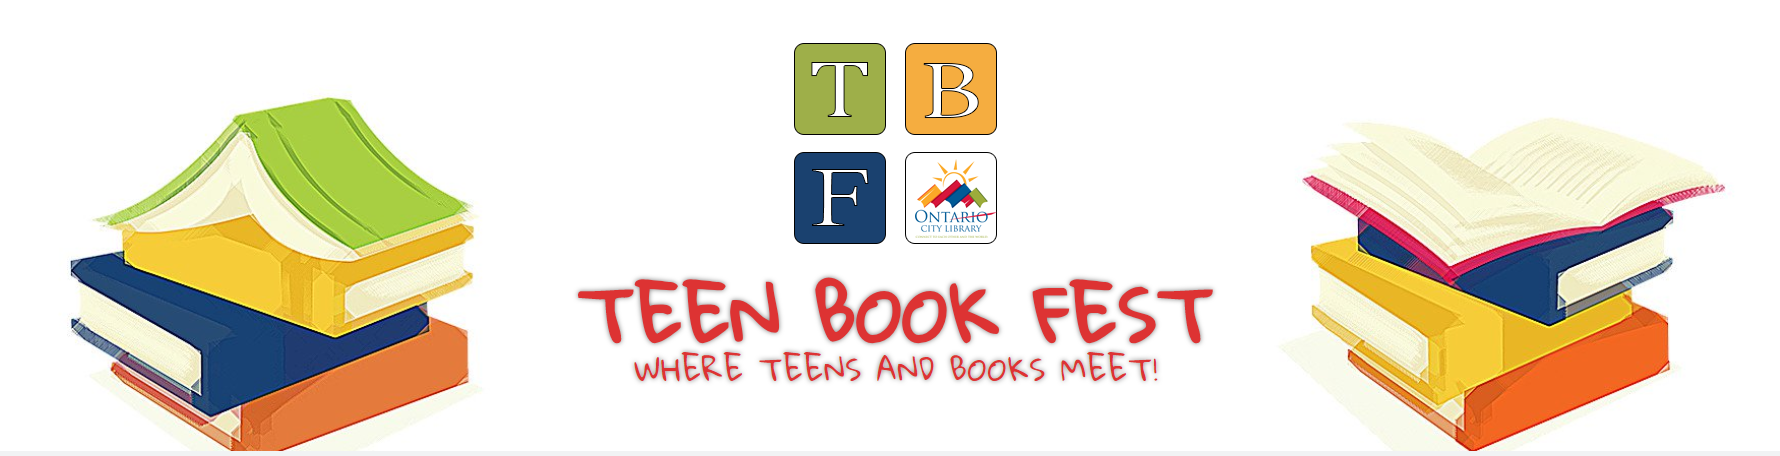 Ontario Teen Book Fest Blog Tour: Spotlight on Amy Spalding